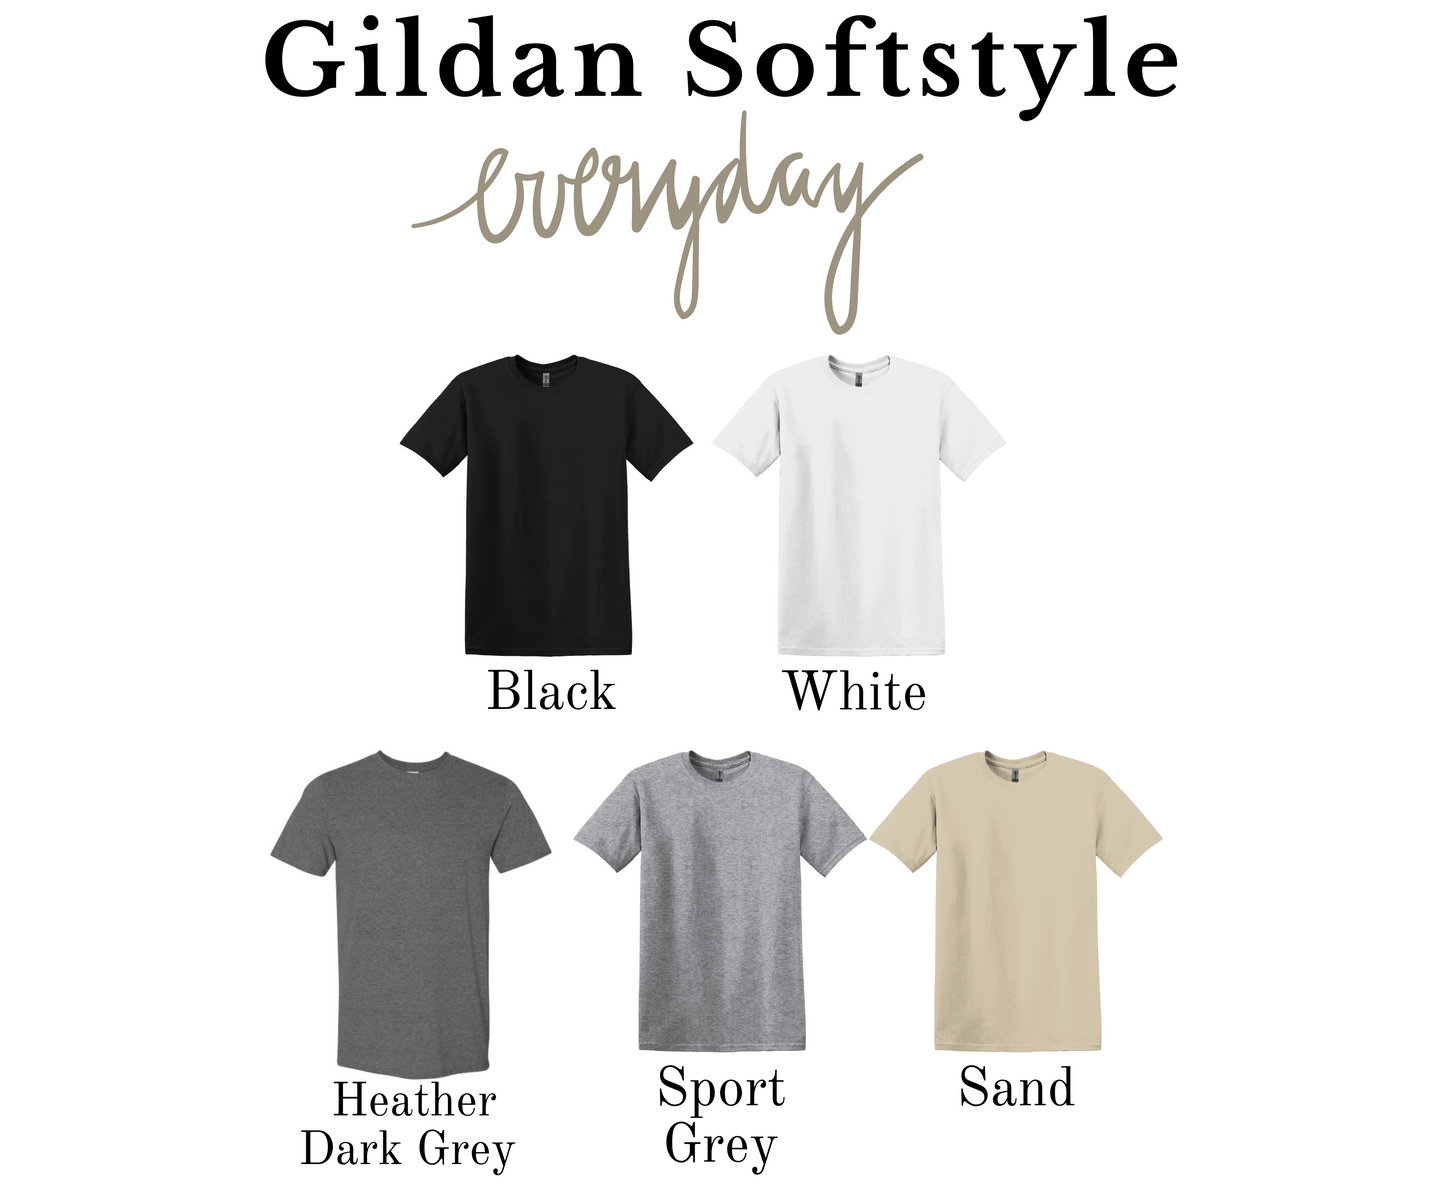 Star Santa Gildan Softstyle T-shirt